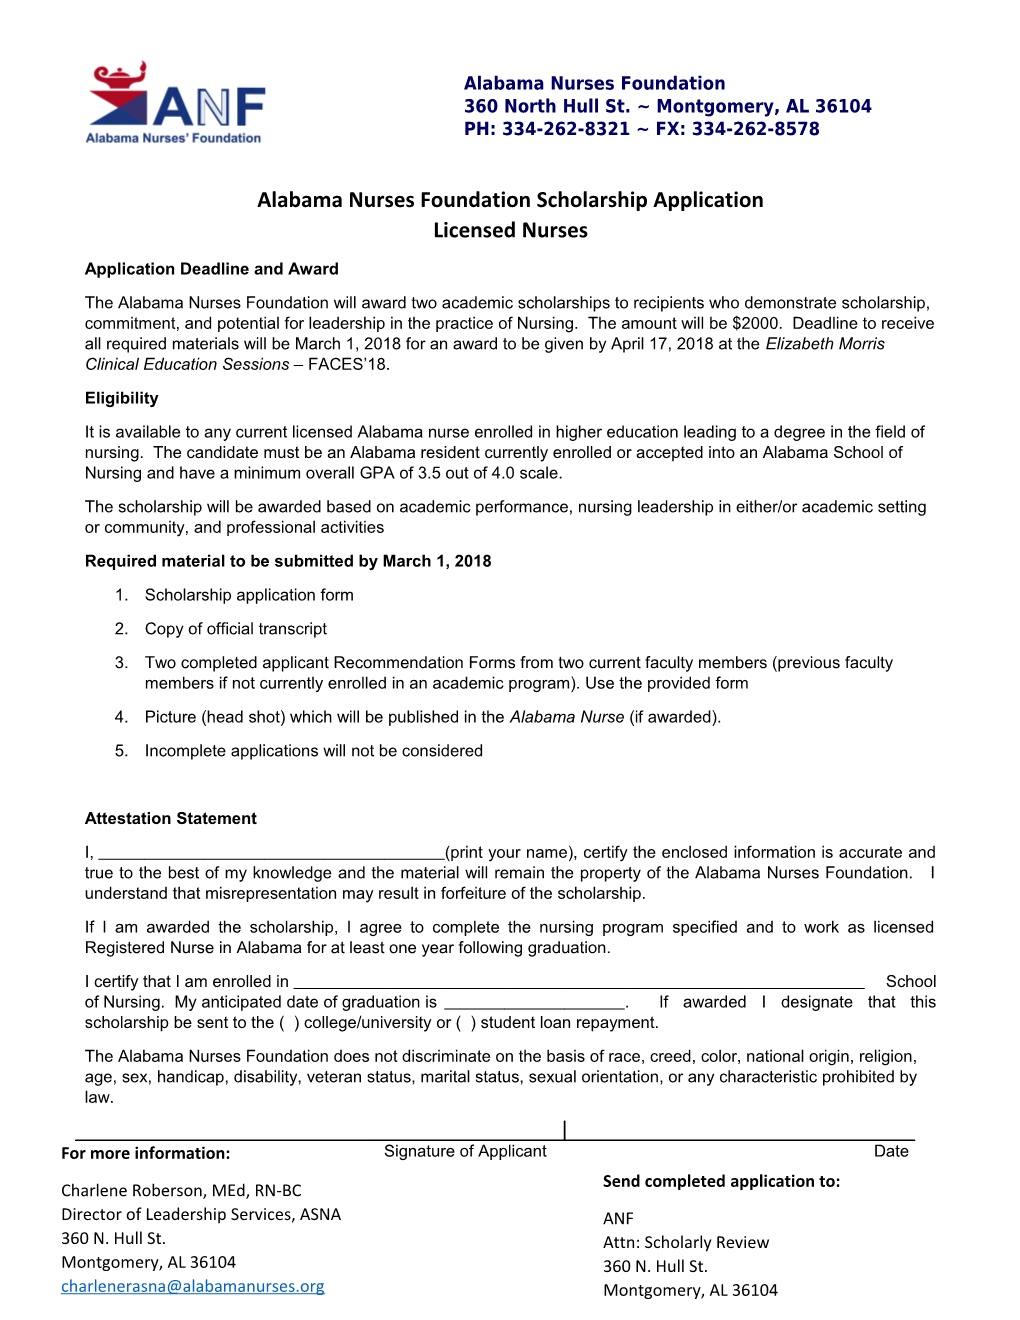 Application Deadline and Award